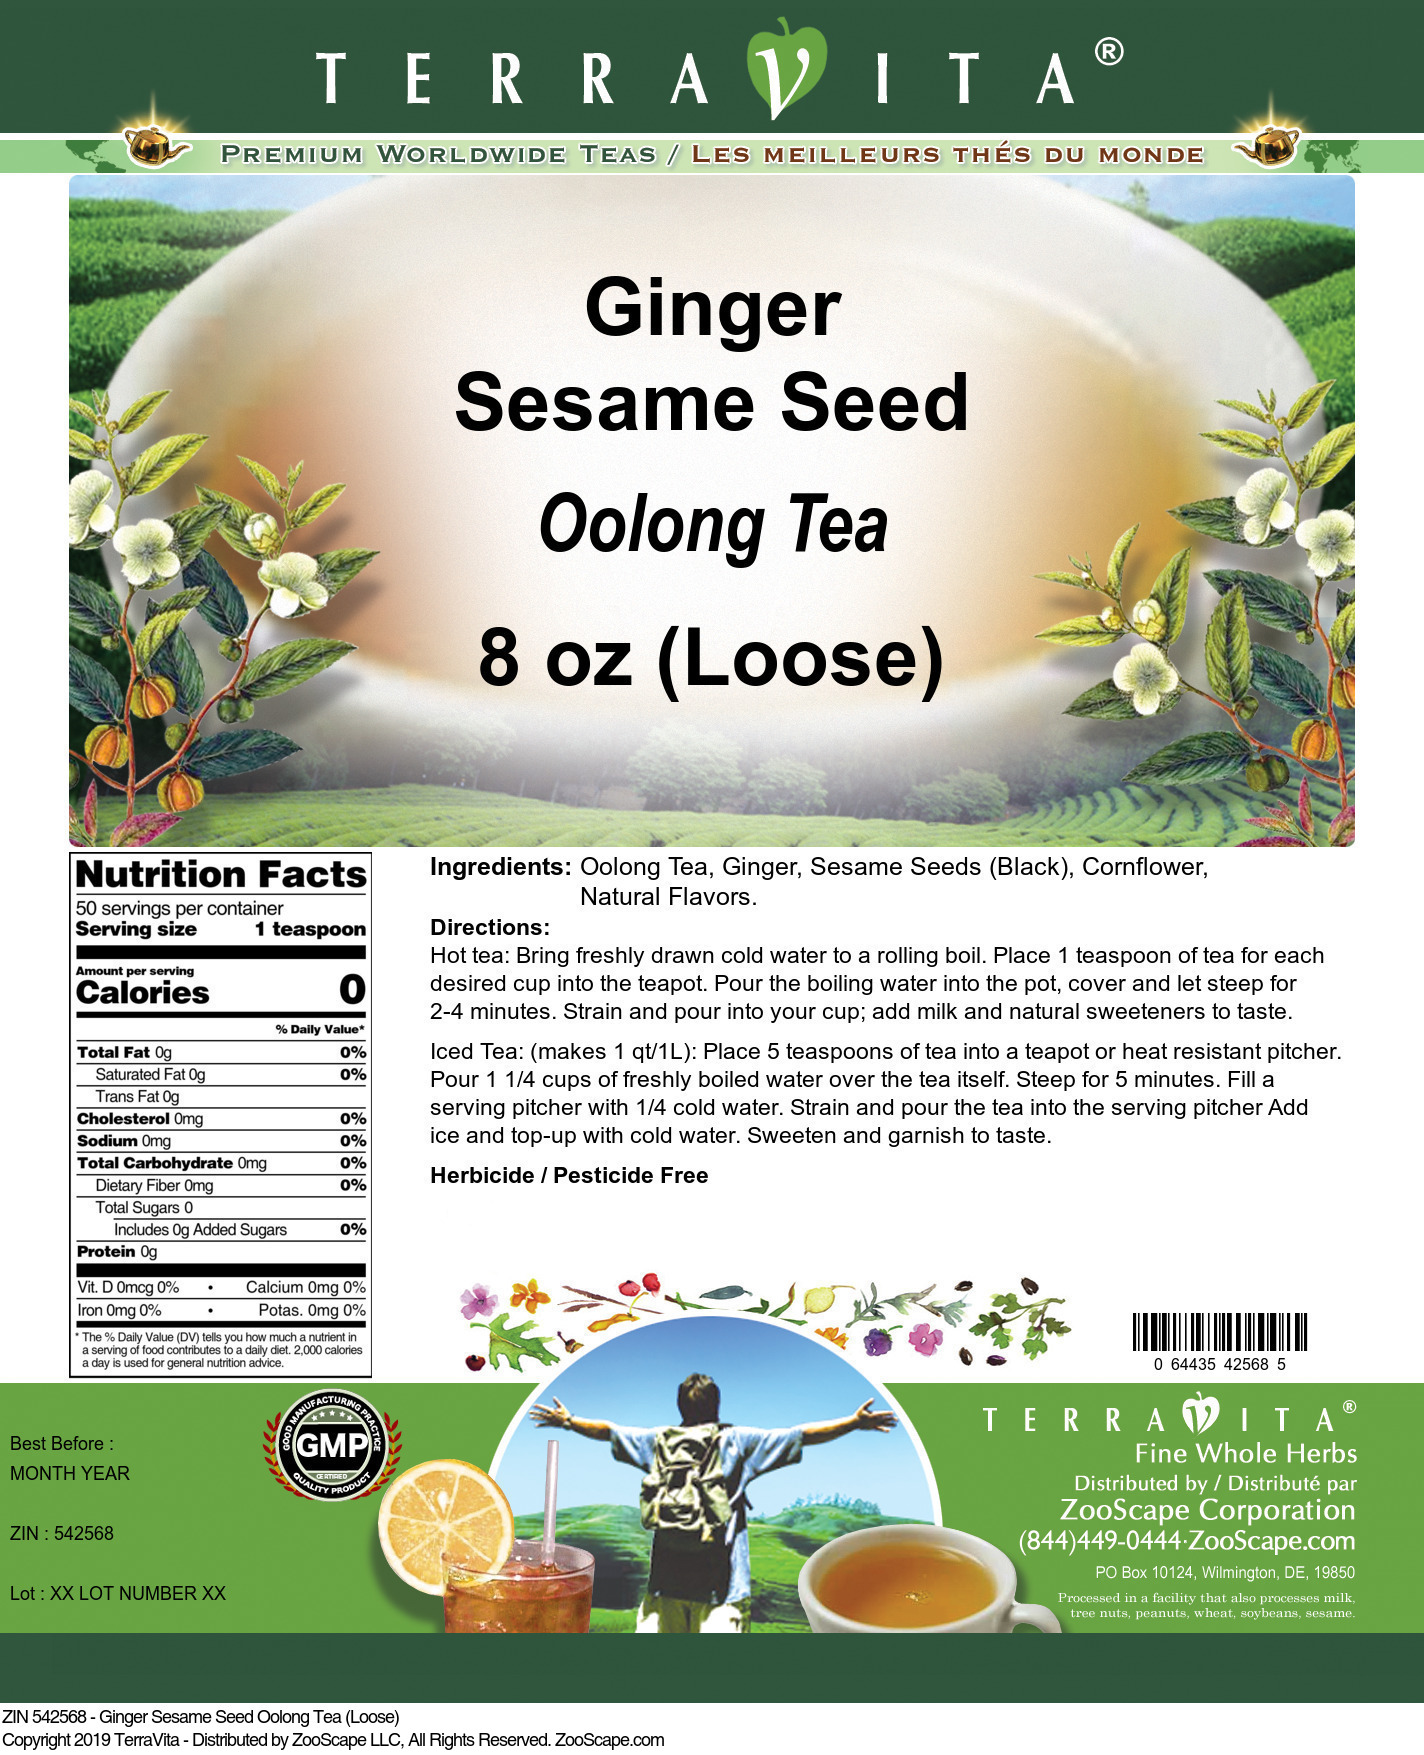 Ginger Sesame Seed Oolong Tea (Loose) - Label